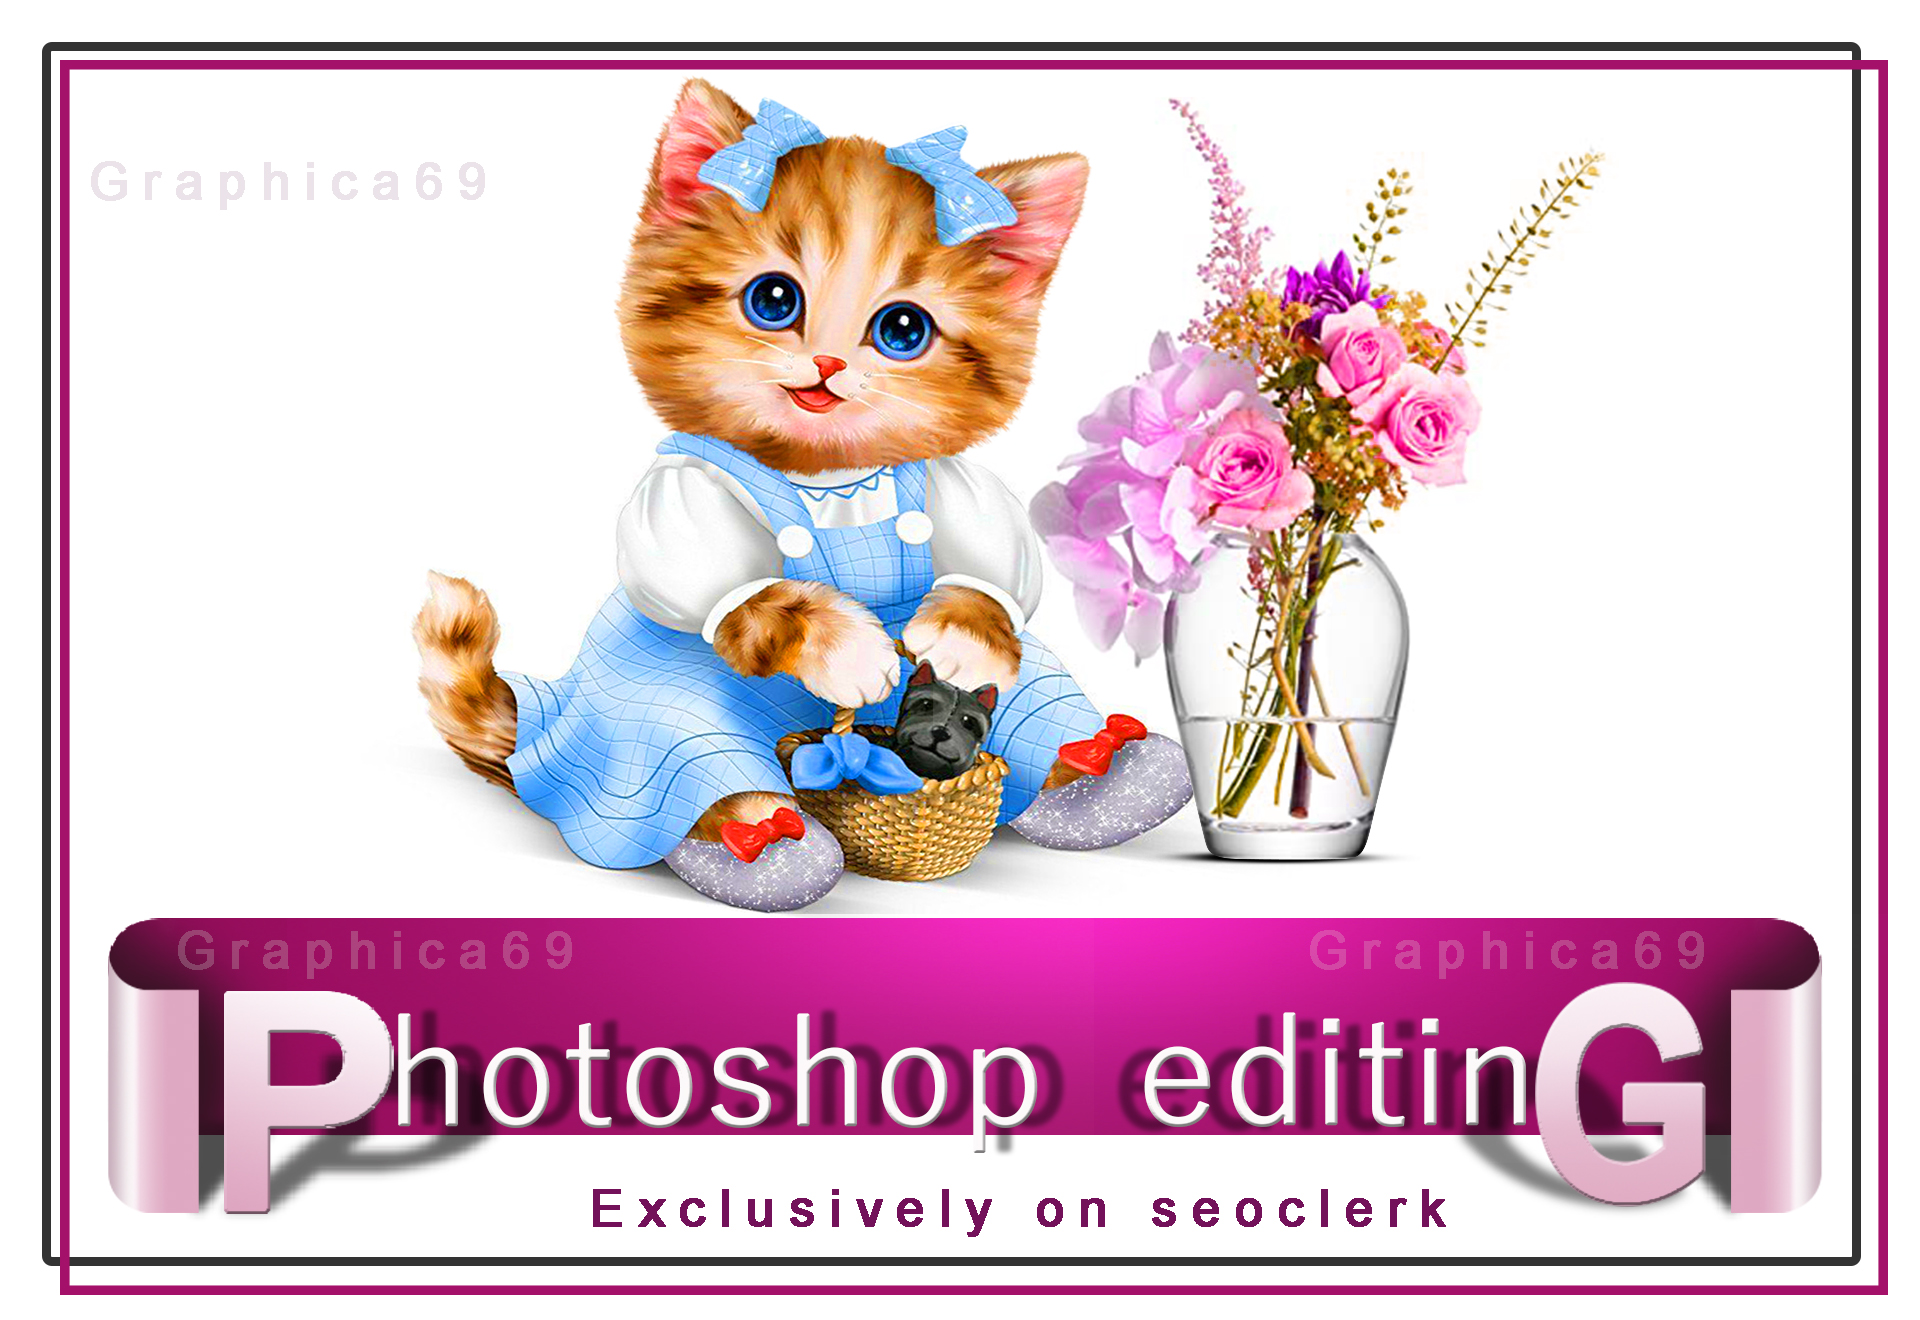 Professional Photoshop, Image Editing & Manipulation Service